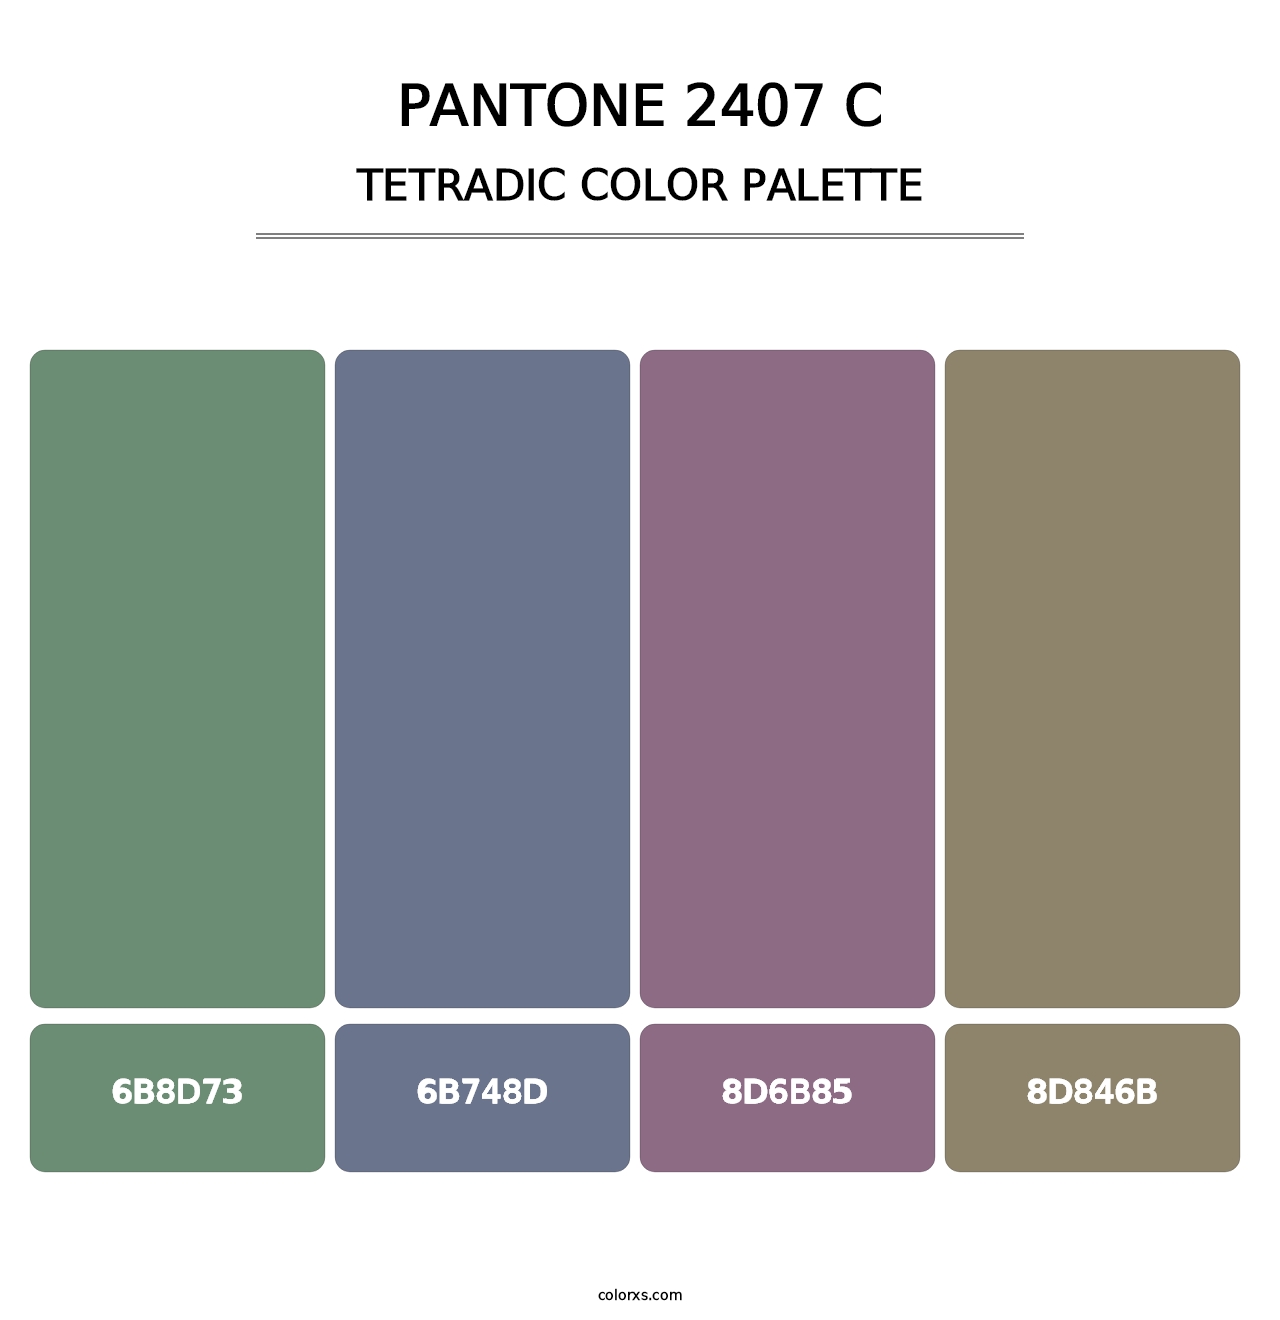 PANTONE 2407 C - Tetradic Color Palette